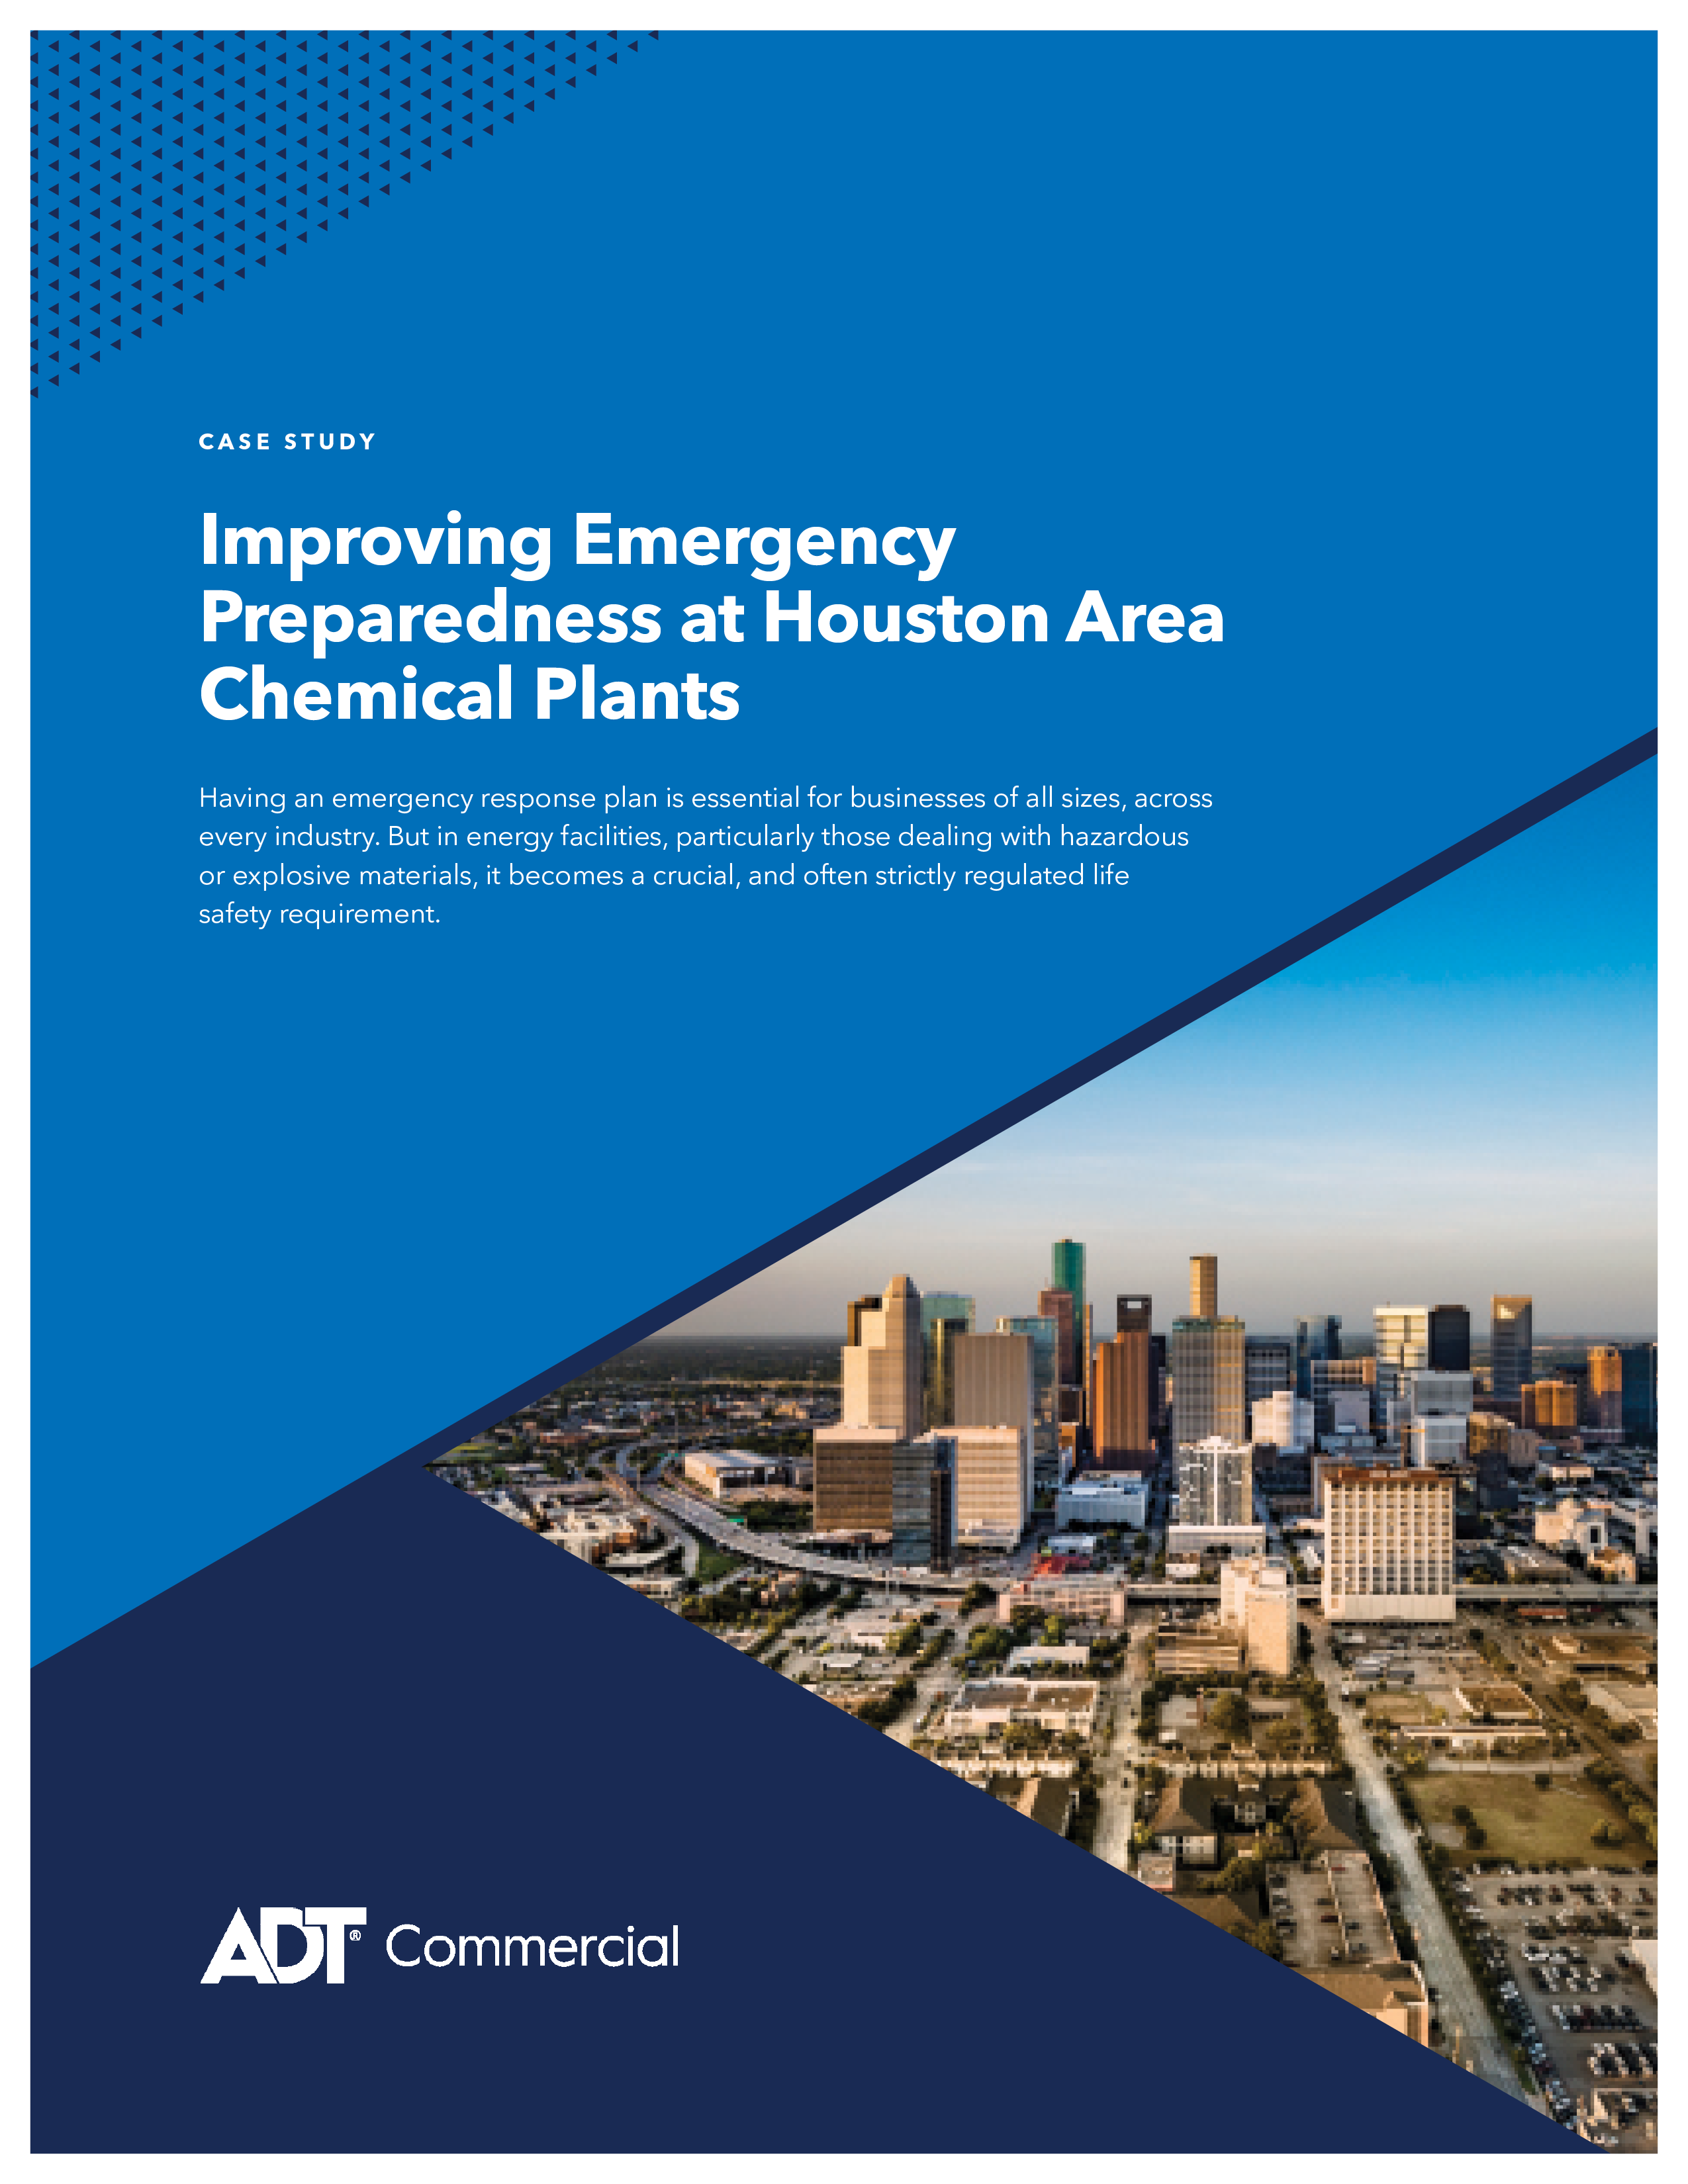 Improving Emergency Preparedness at Houston Area Chemical Plants case study